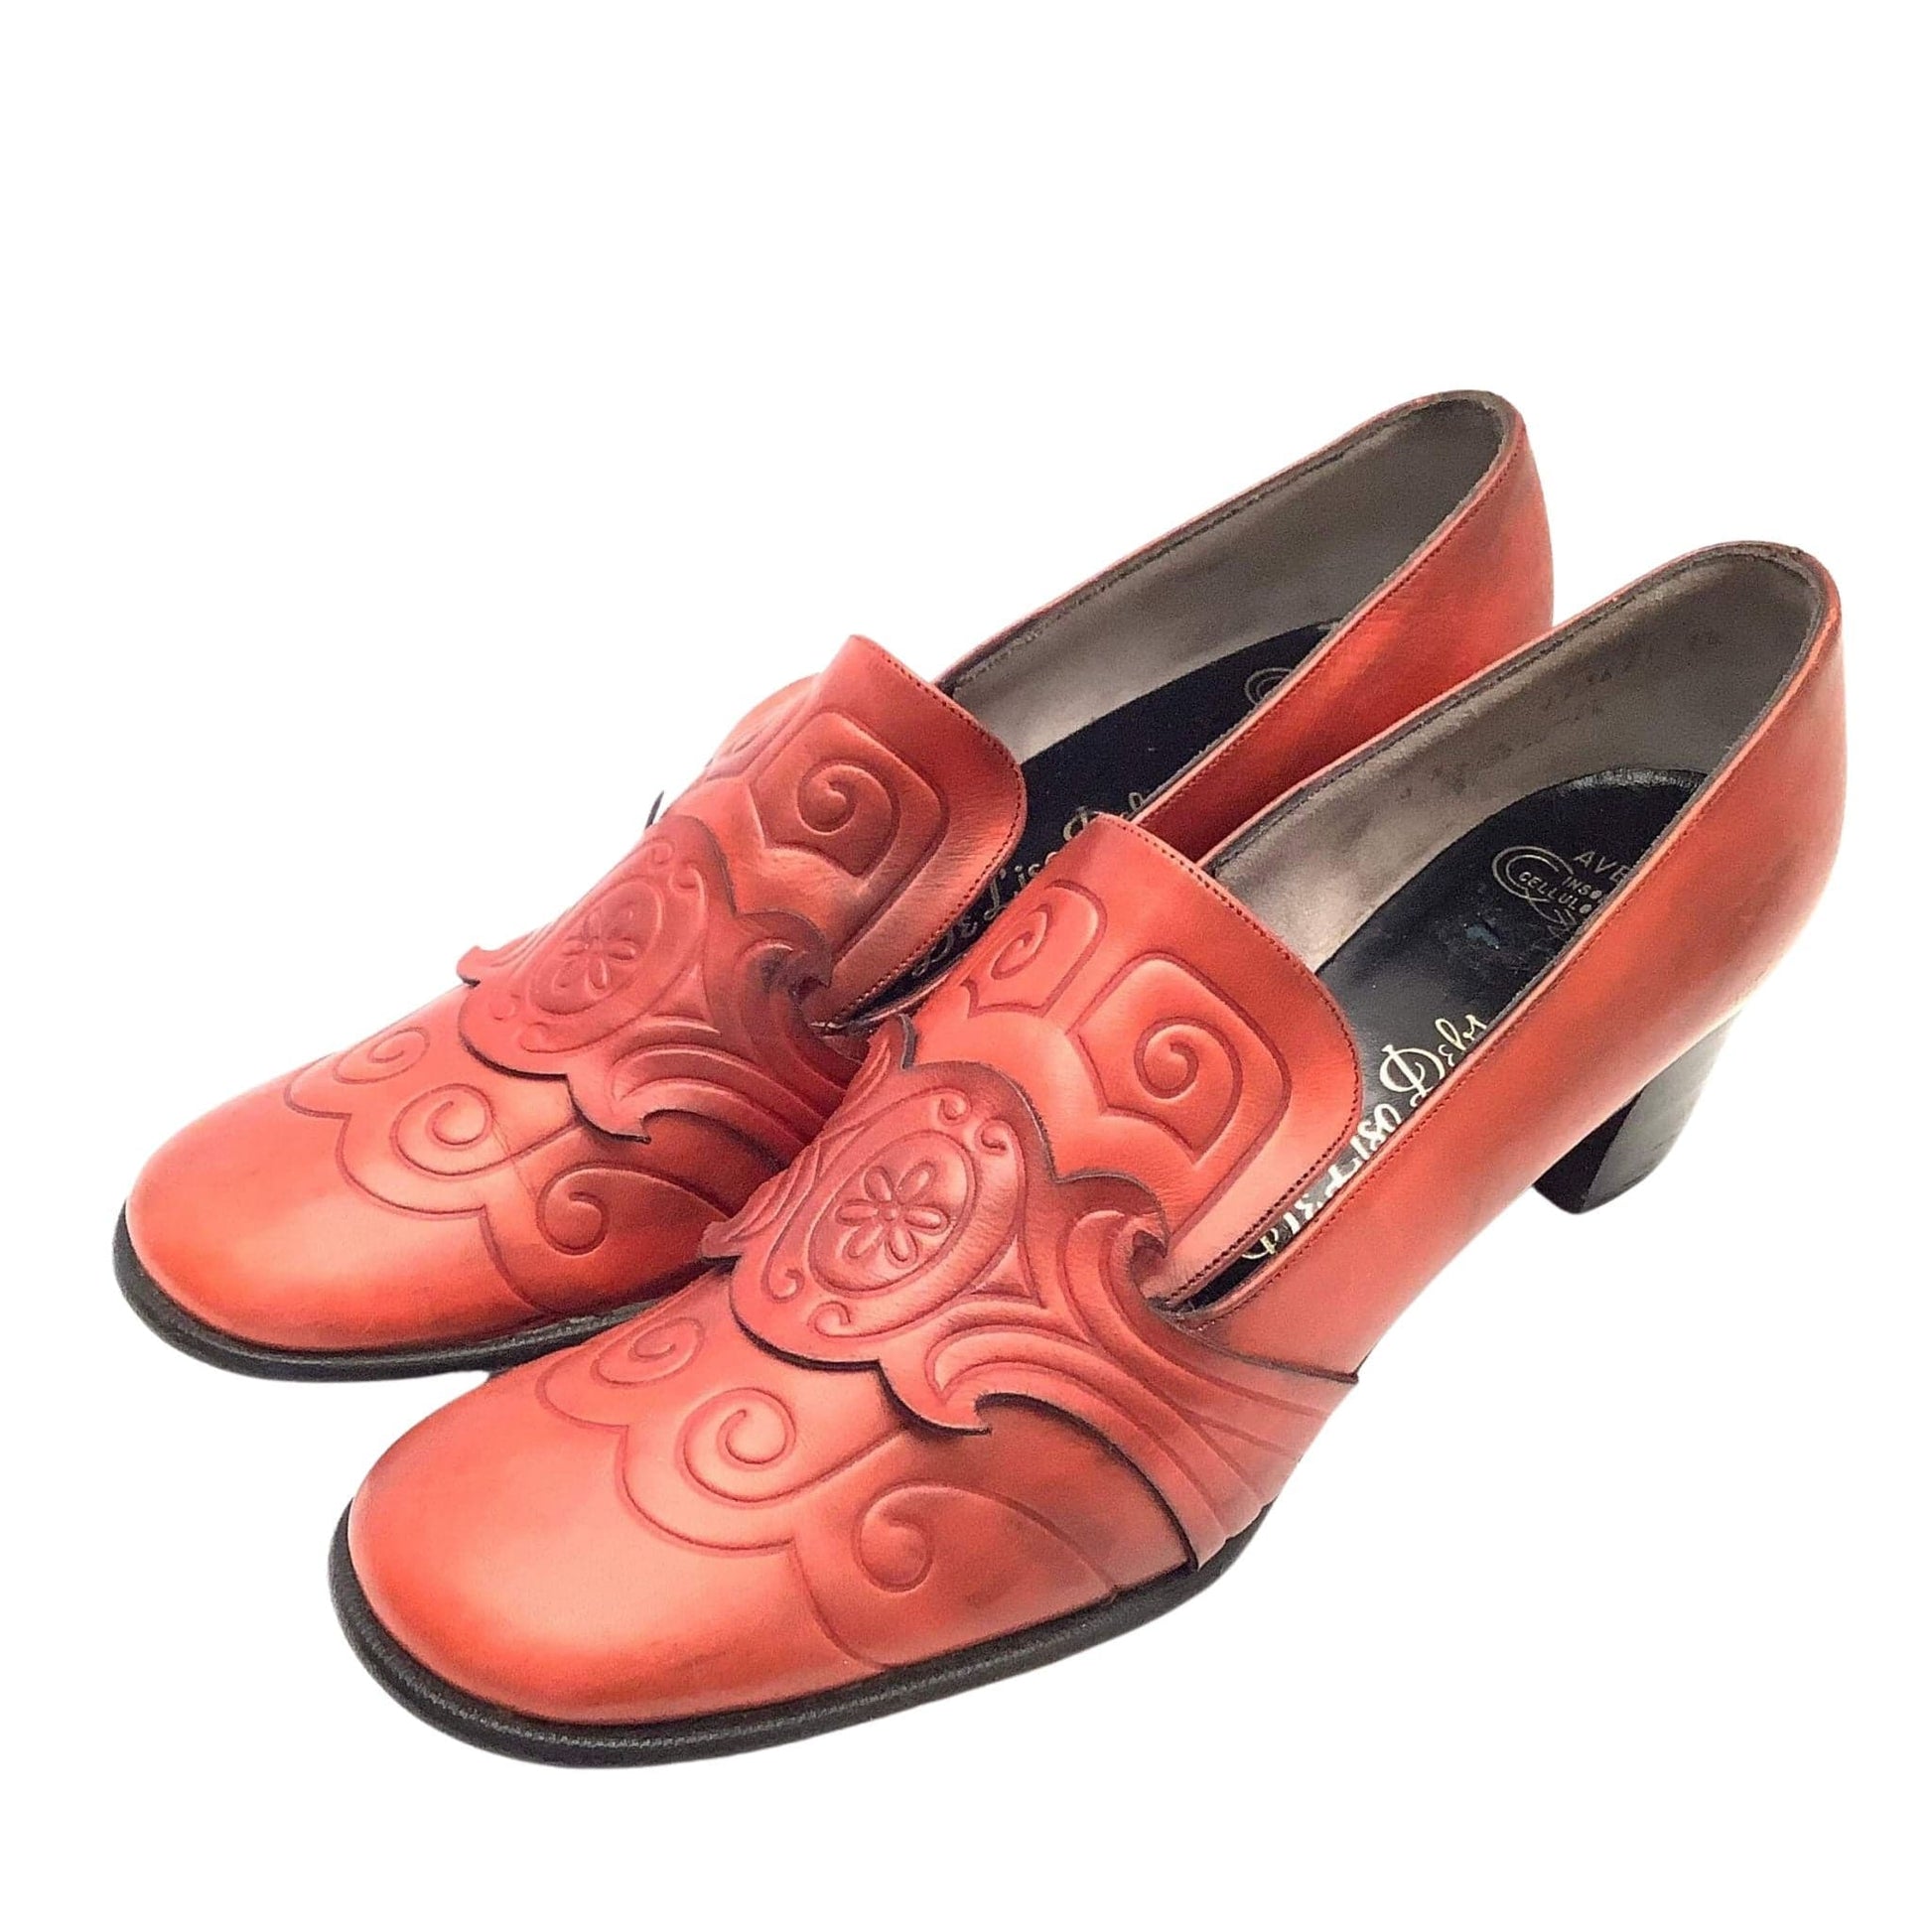 Vintage Palter Deliso Heels 8.5 / Orange / Vintage 1960s